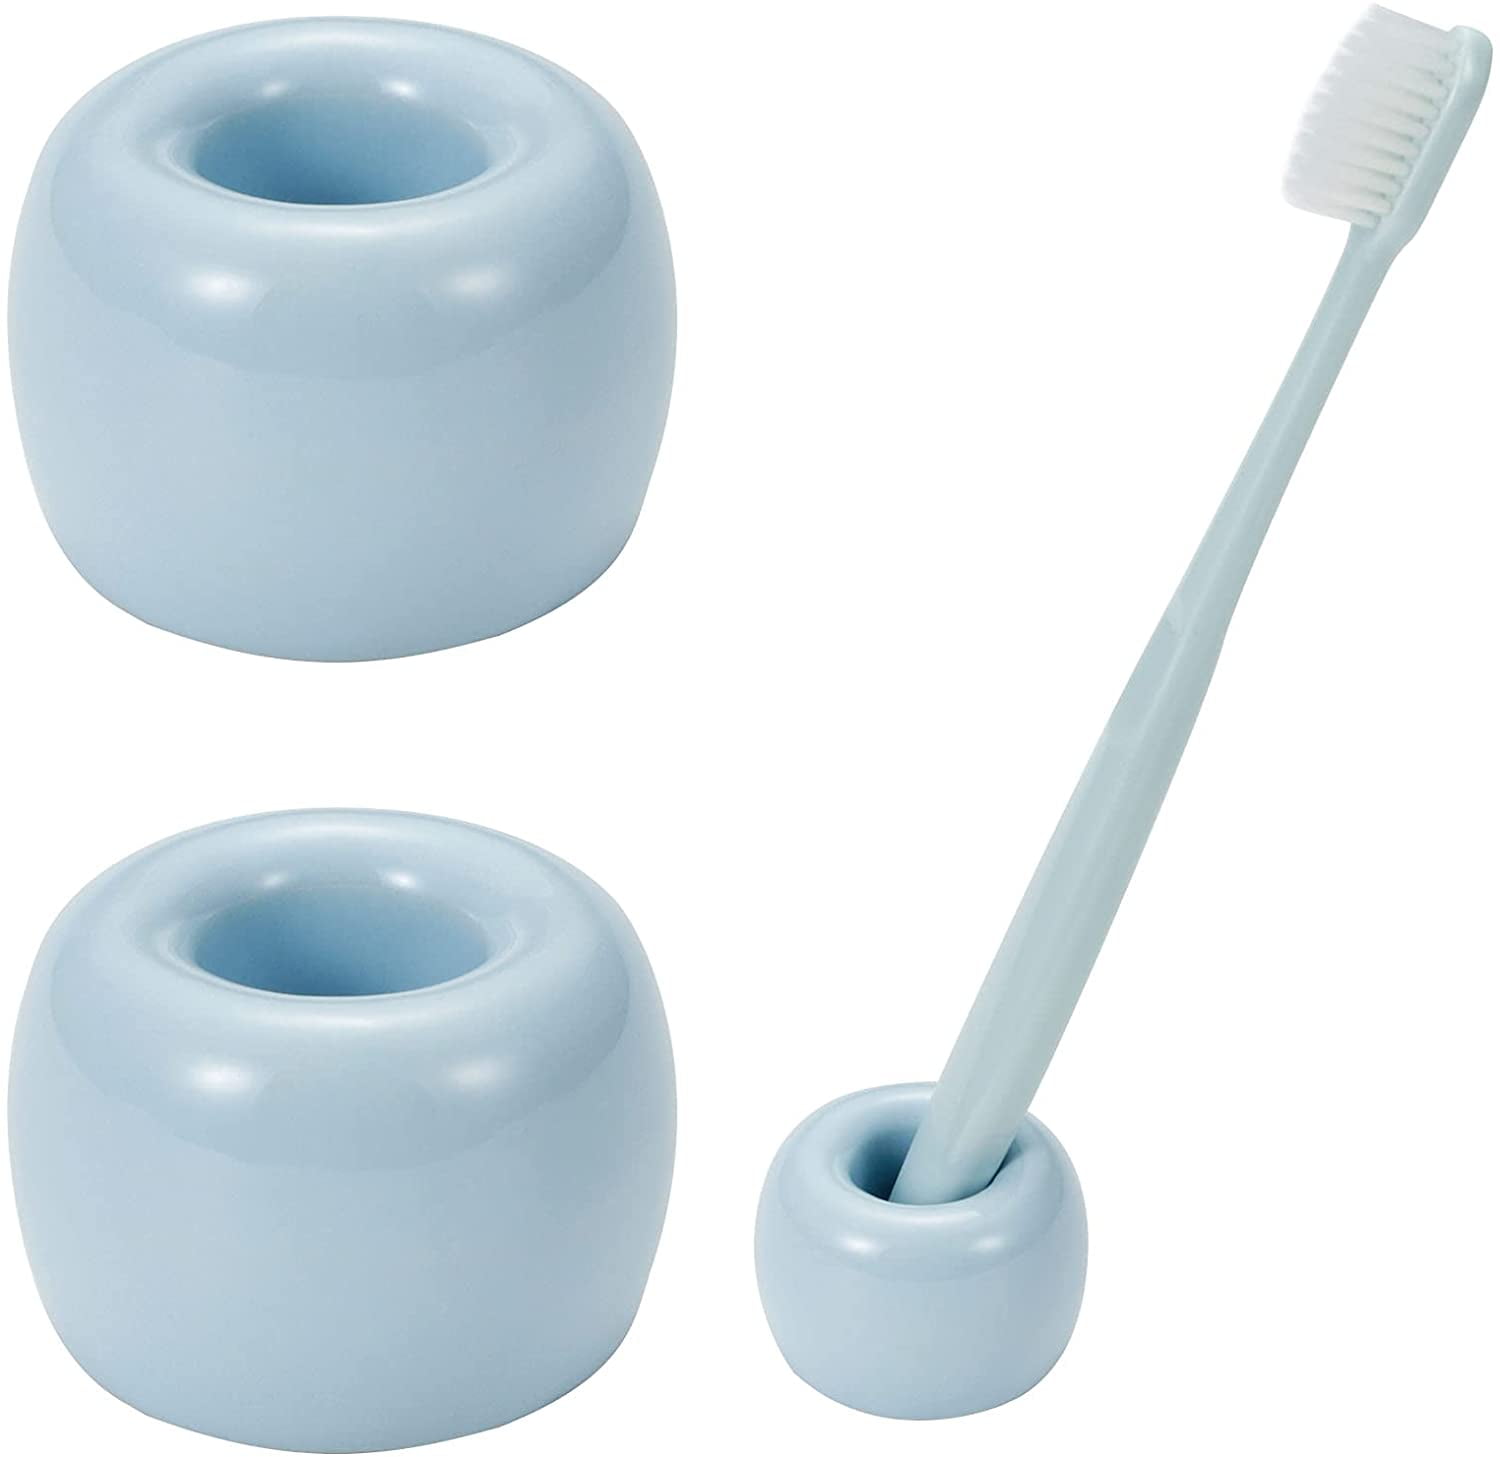 For Bathroom Vanity Counte Mini Ceramic Handmade Toothbrush Holder Stand 